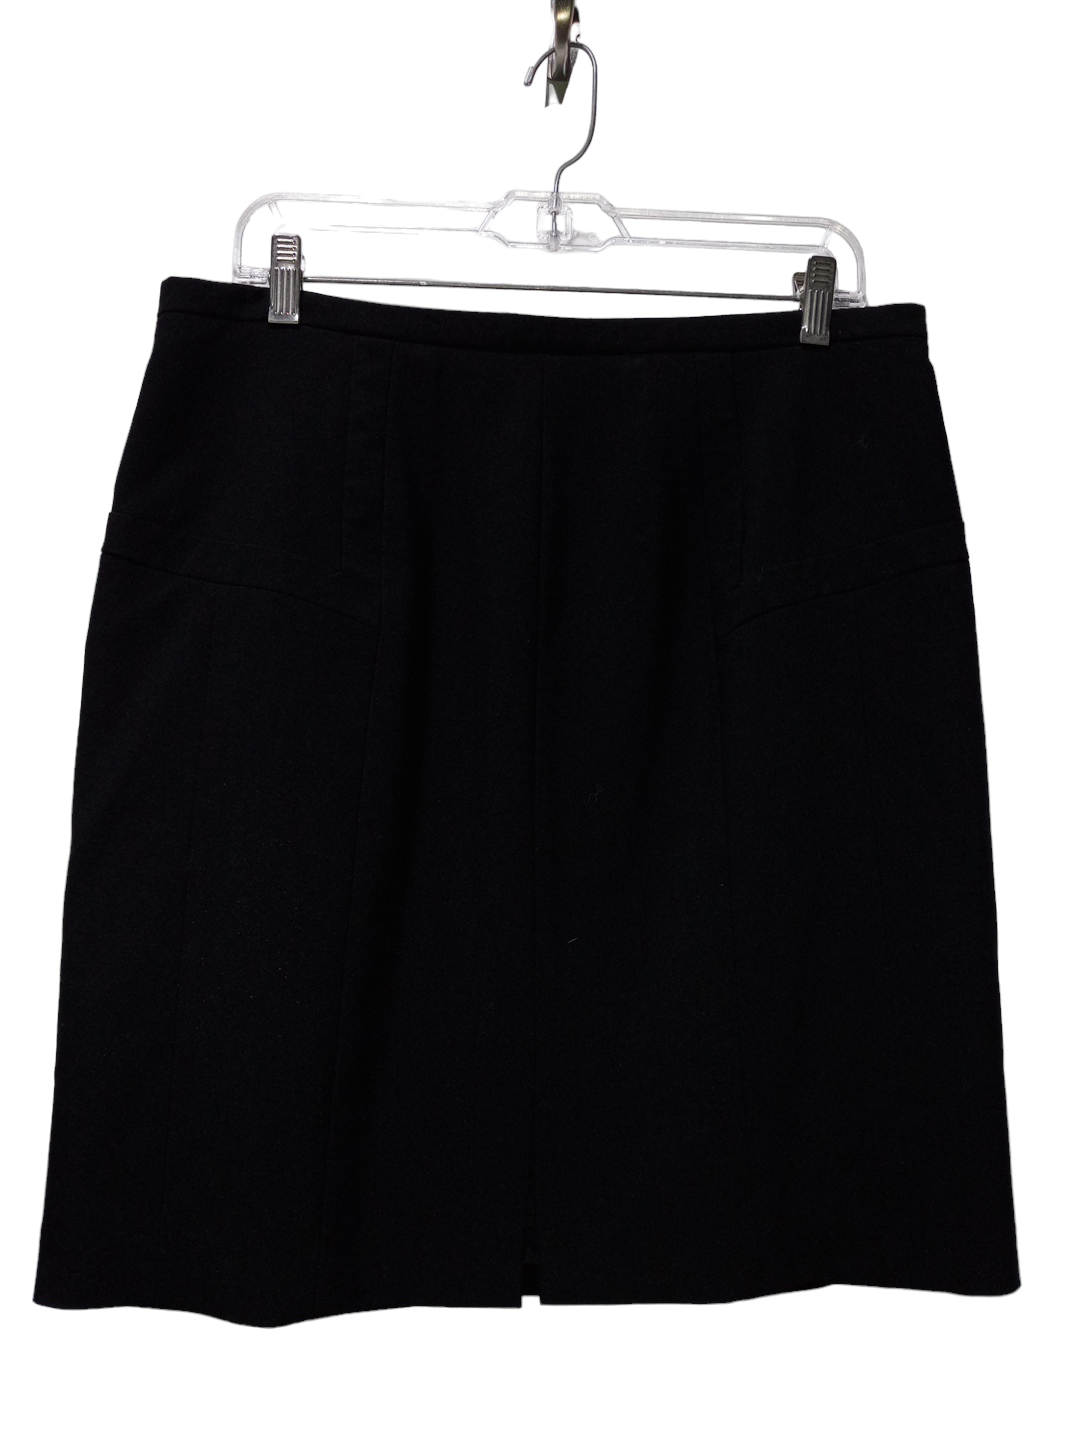 Black Skirt Midi Clothes Mentor, Size 3x